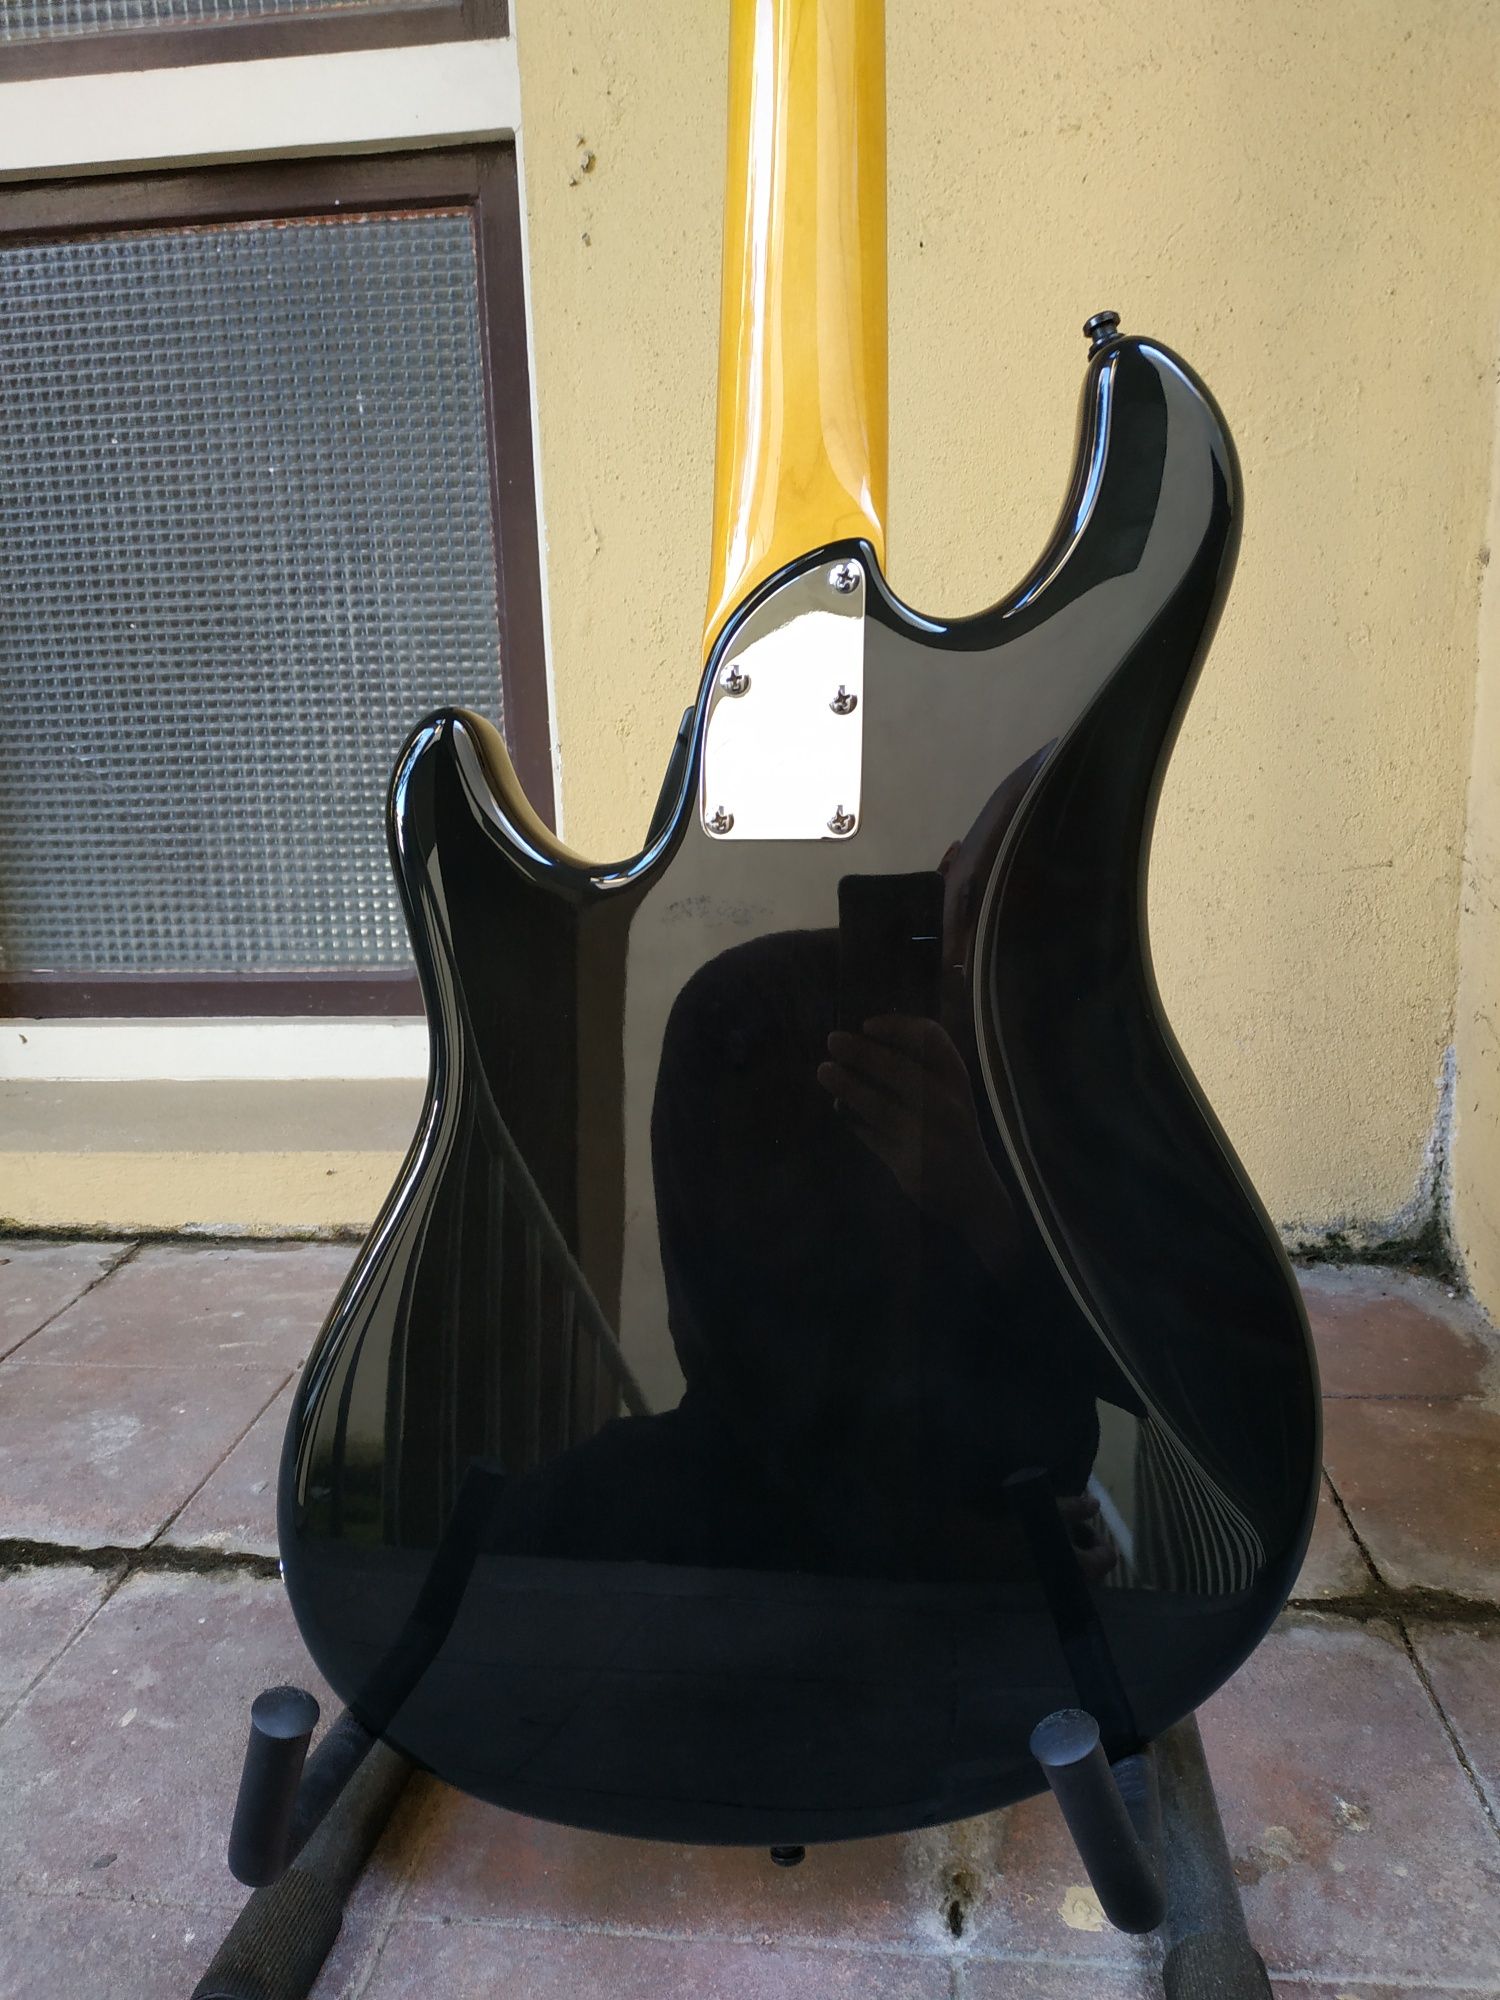 Fender dimension bass